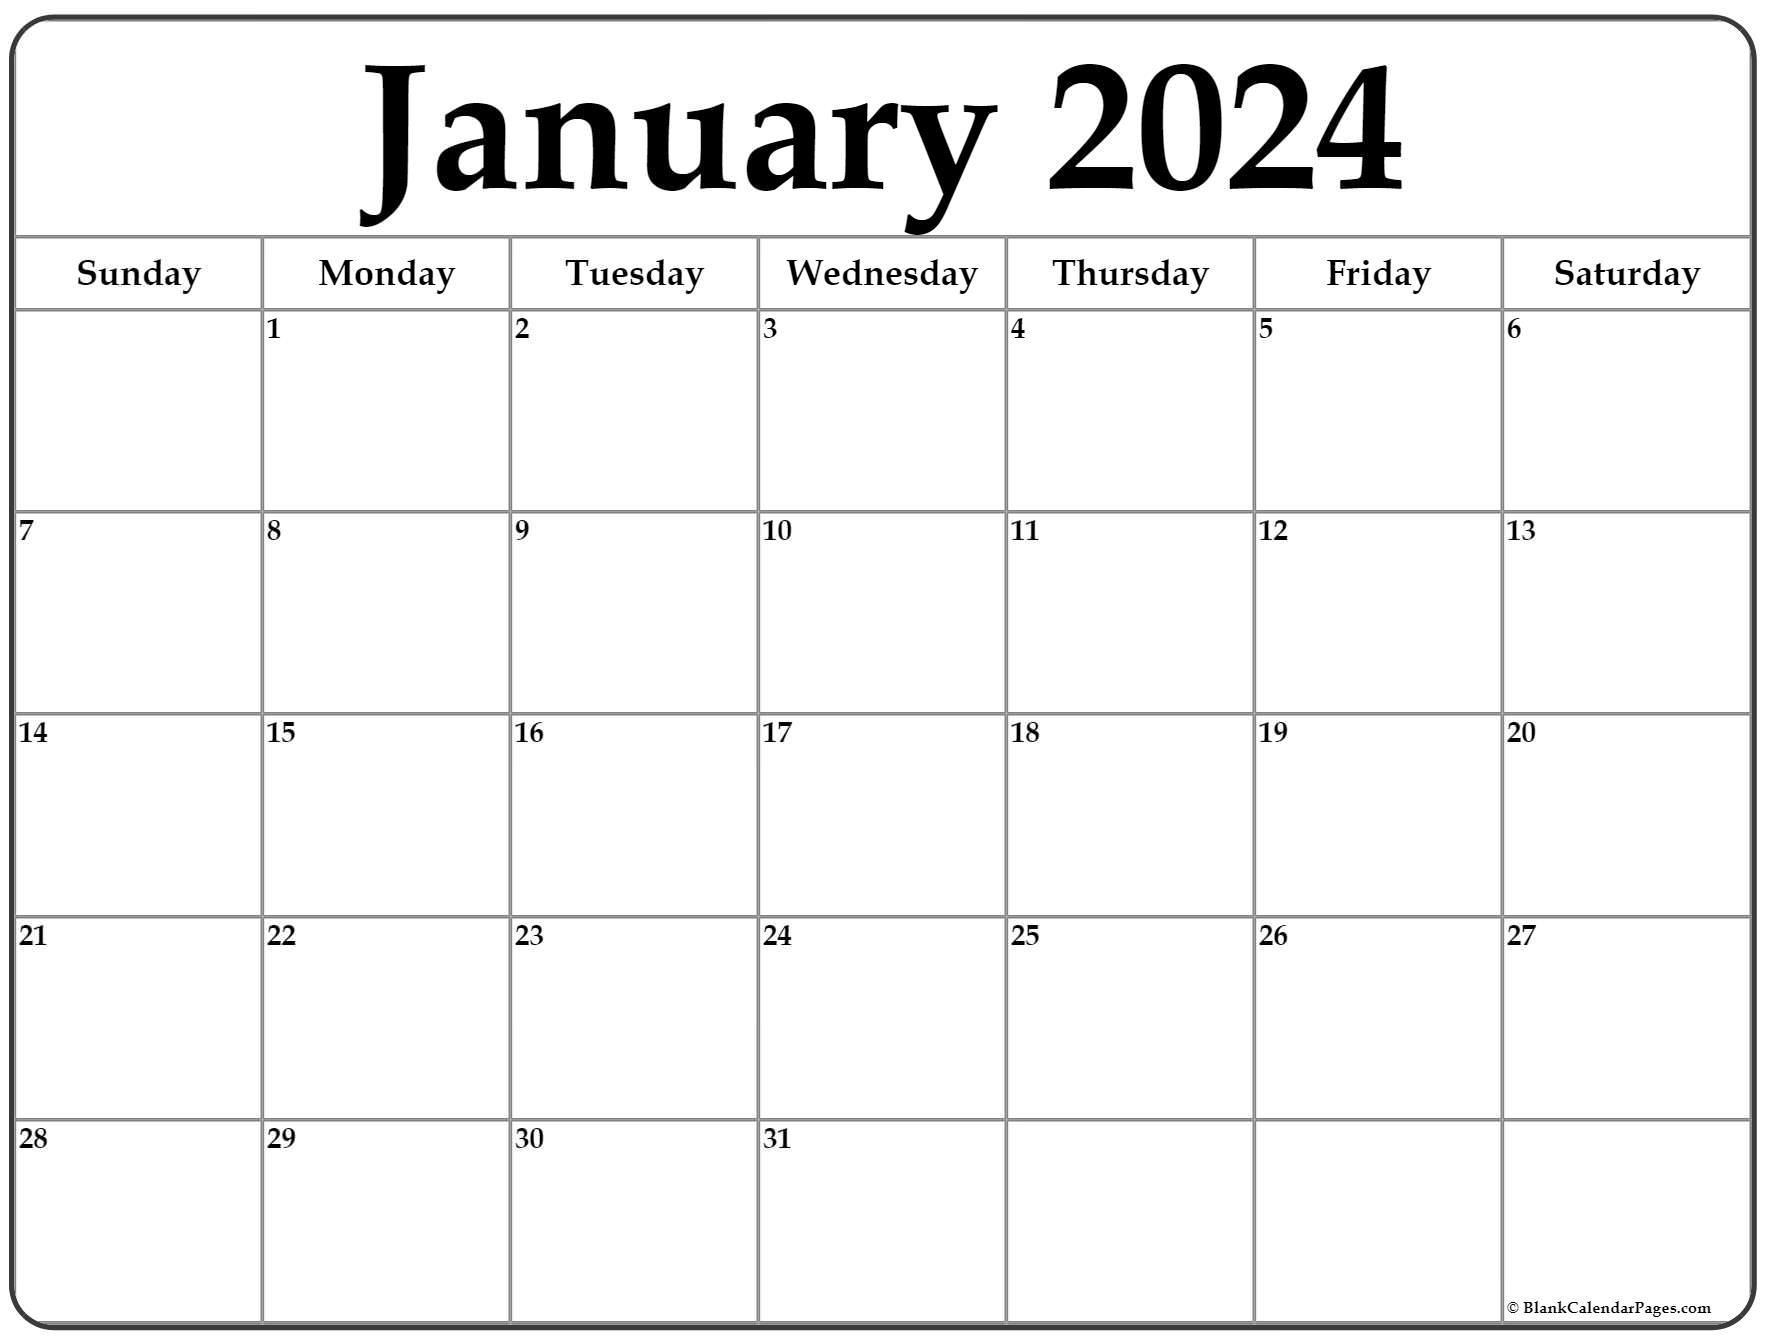 January 2024 Calendar | Free Printable Calendar | Printable Calendar 2024 Free Blank